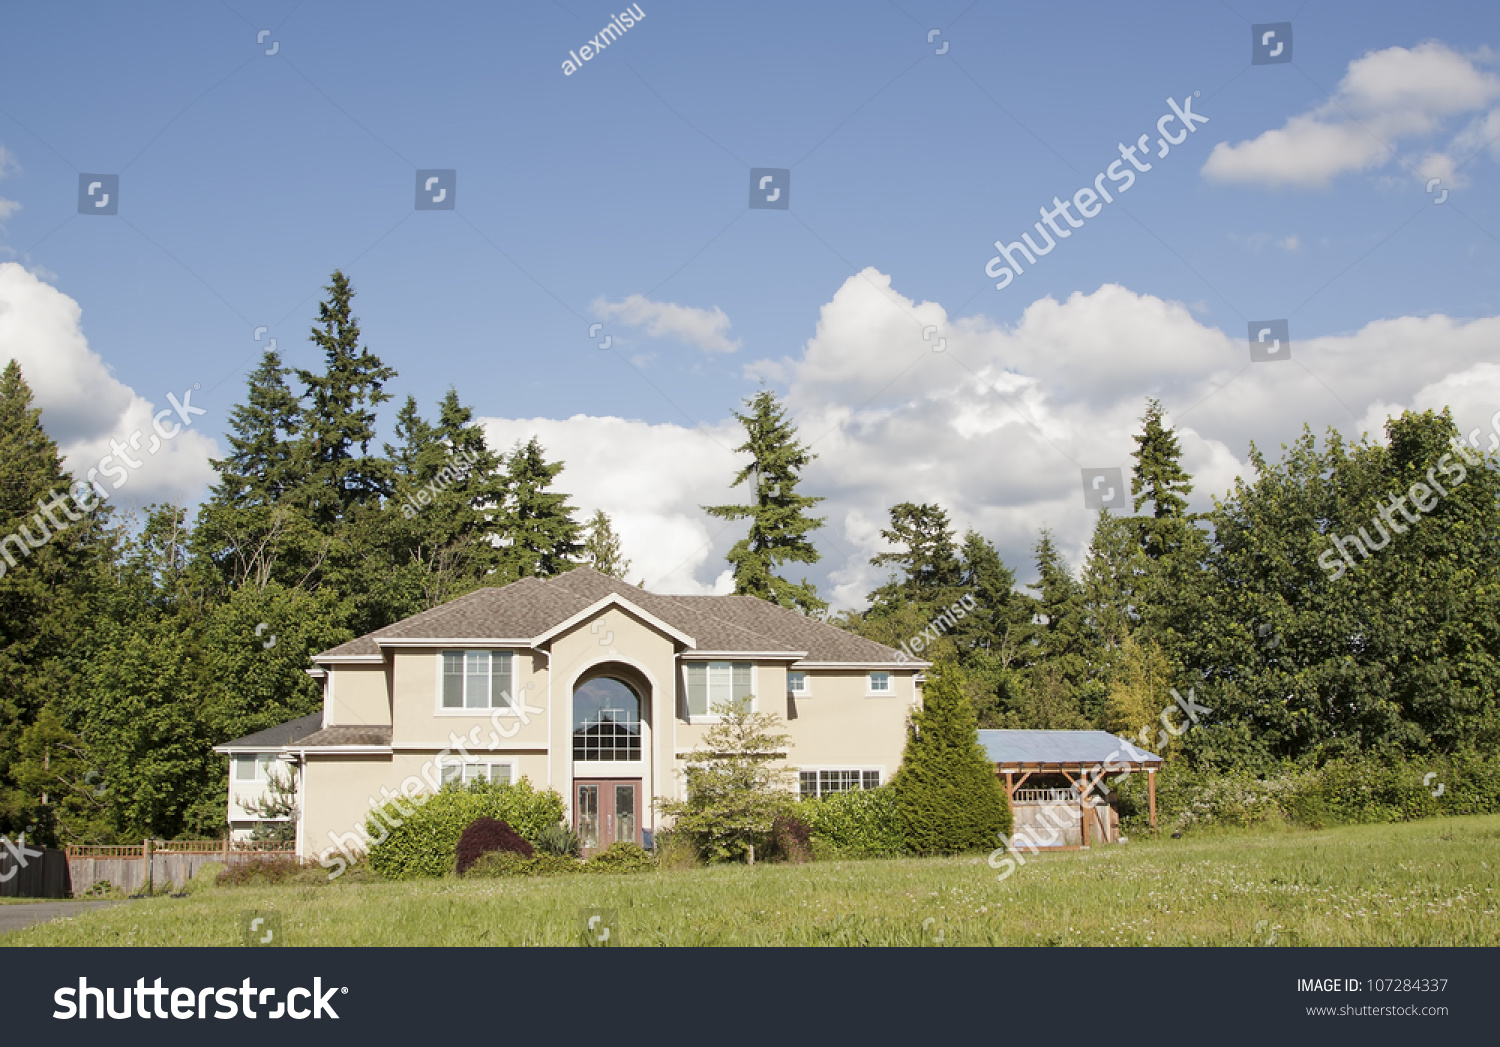 New Beautiful Suburban House Blue Sky Stock Photo 107284337 Shutterstock